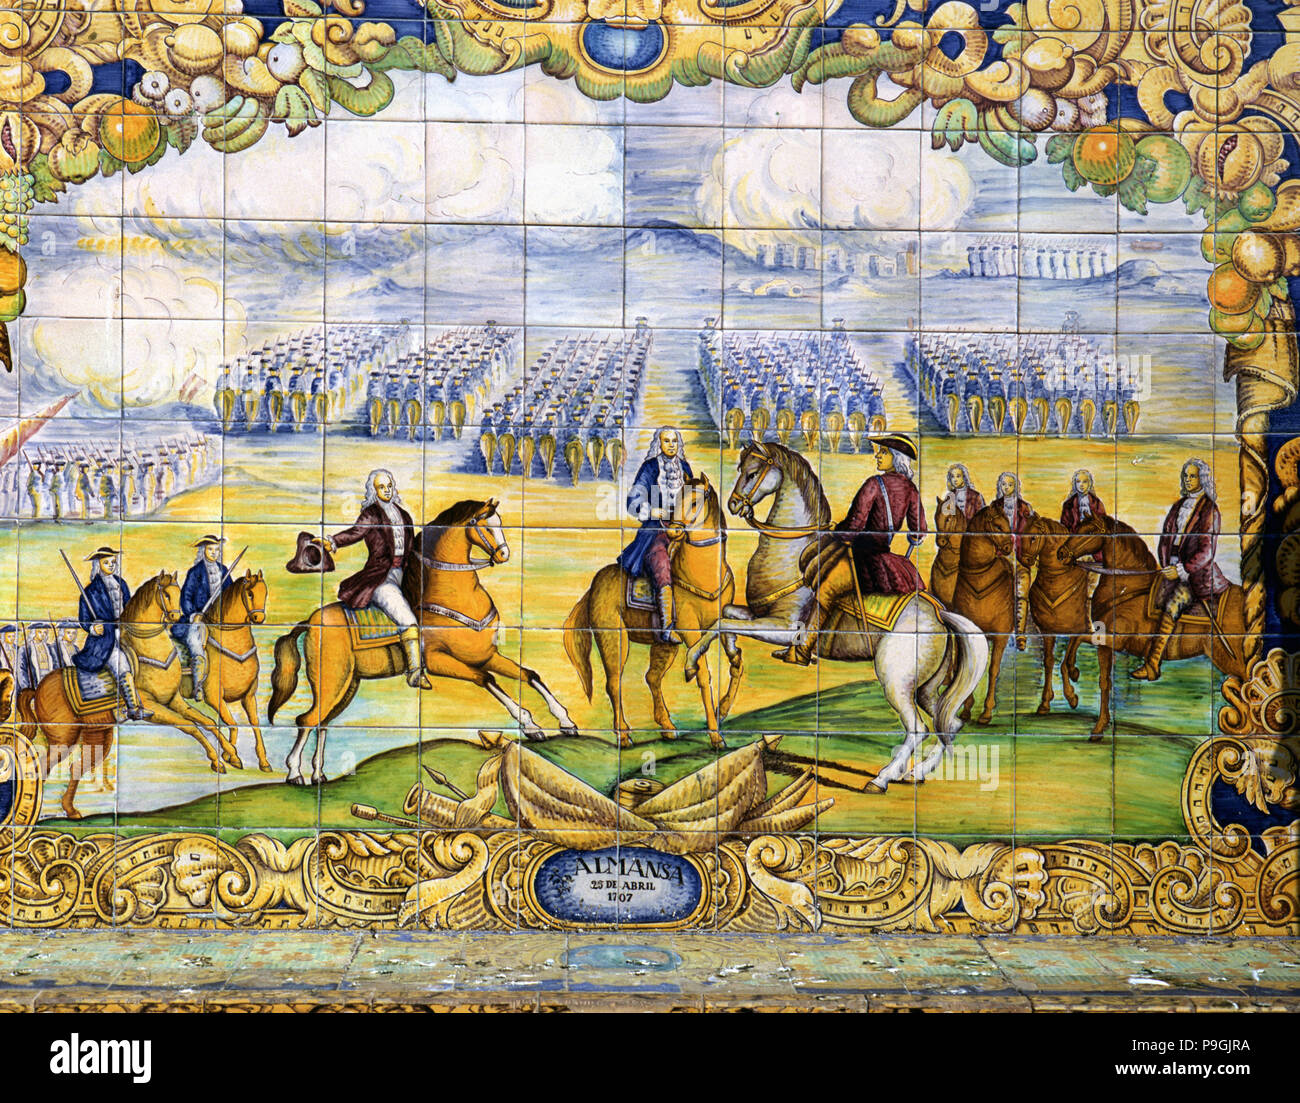 Battle of Almansa in 1707, tile panel located in the Plaza of Spain in Seville. Stock Photo